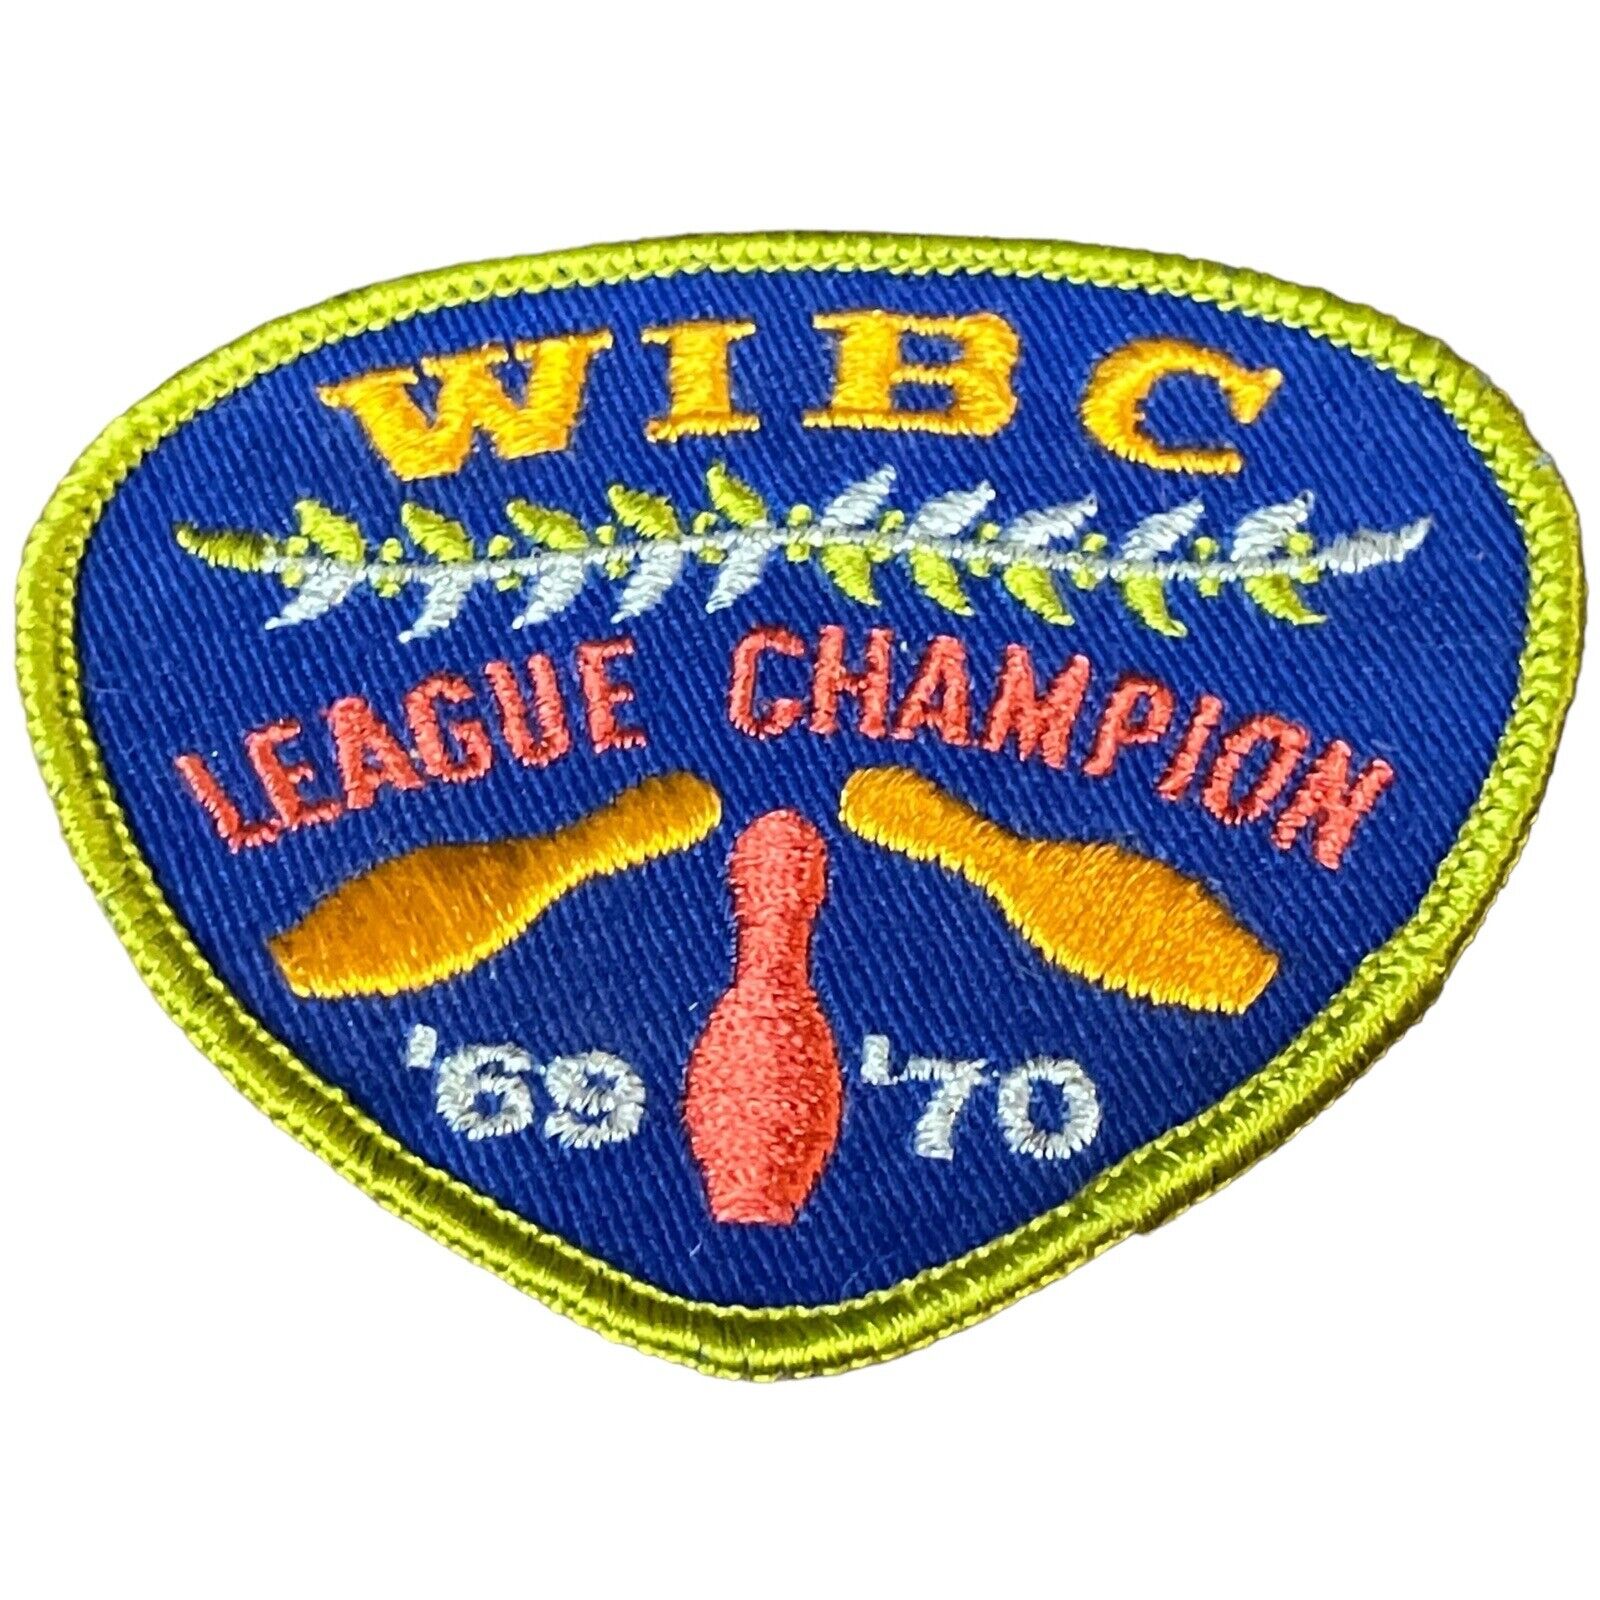 Vintage WIBC 1969 1970 Women’s League Champion Bowling Blue Yellow Pins Patch